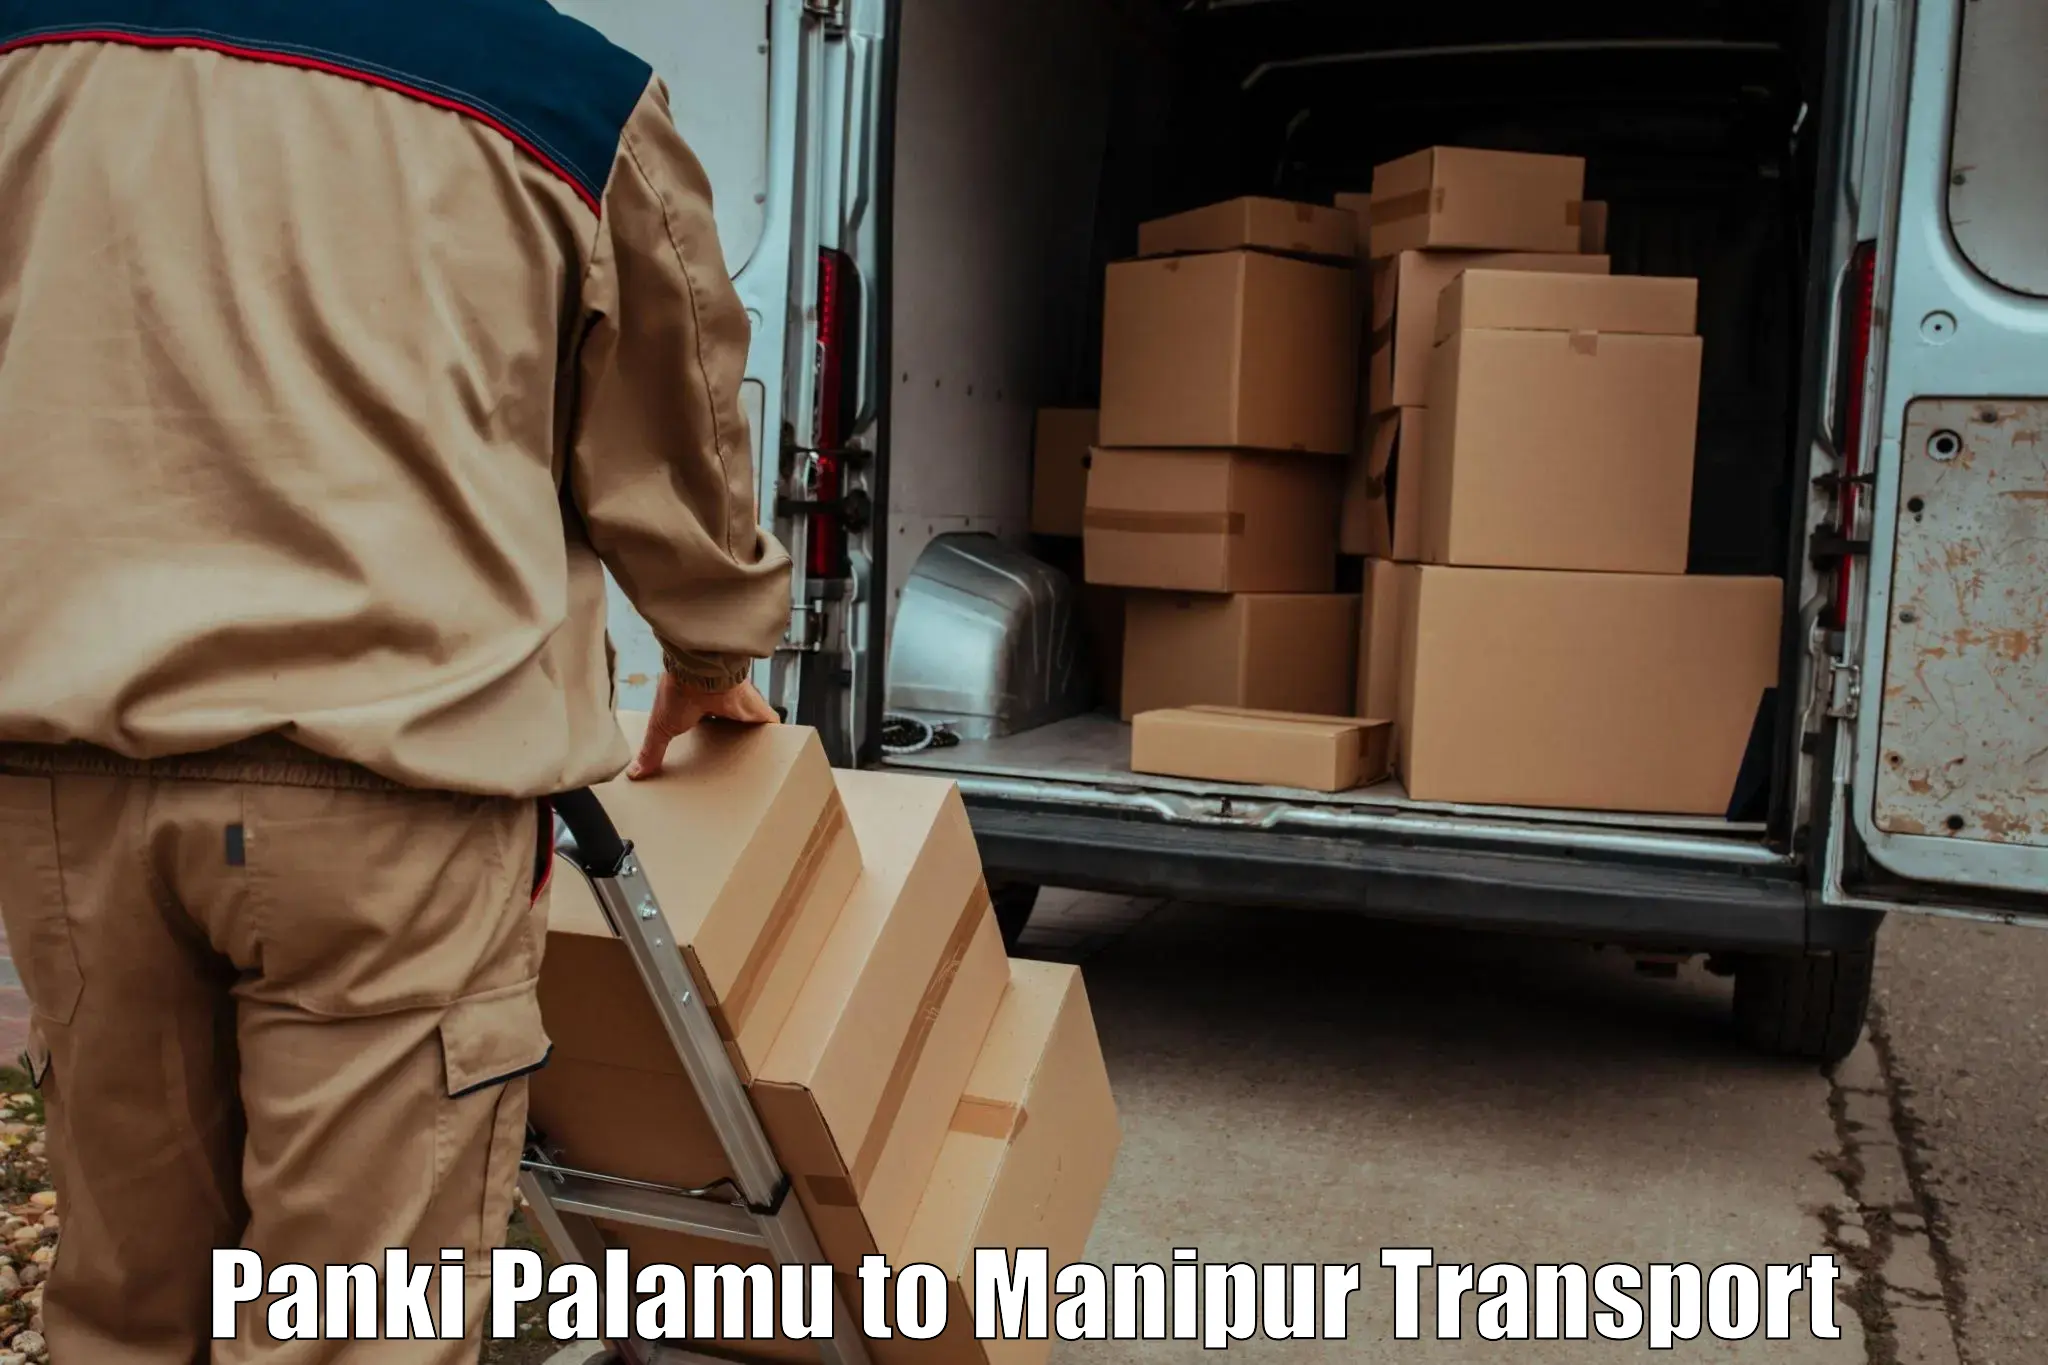 Shipping partner Panki Palamu to Manipur